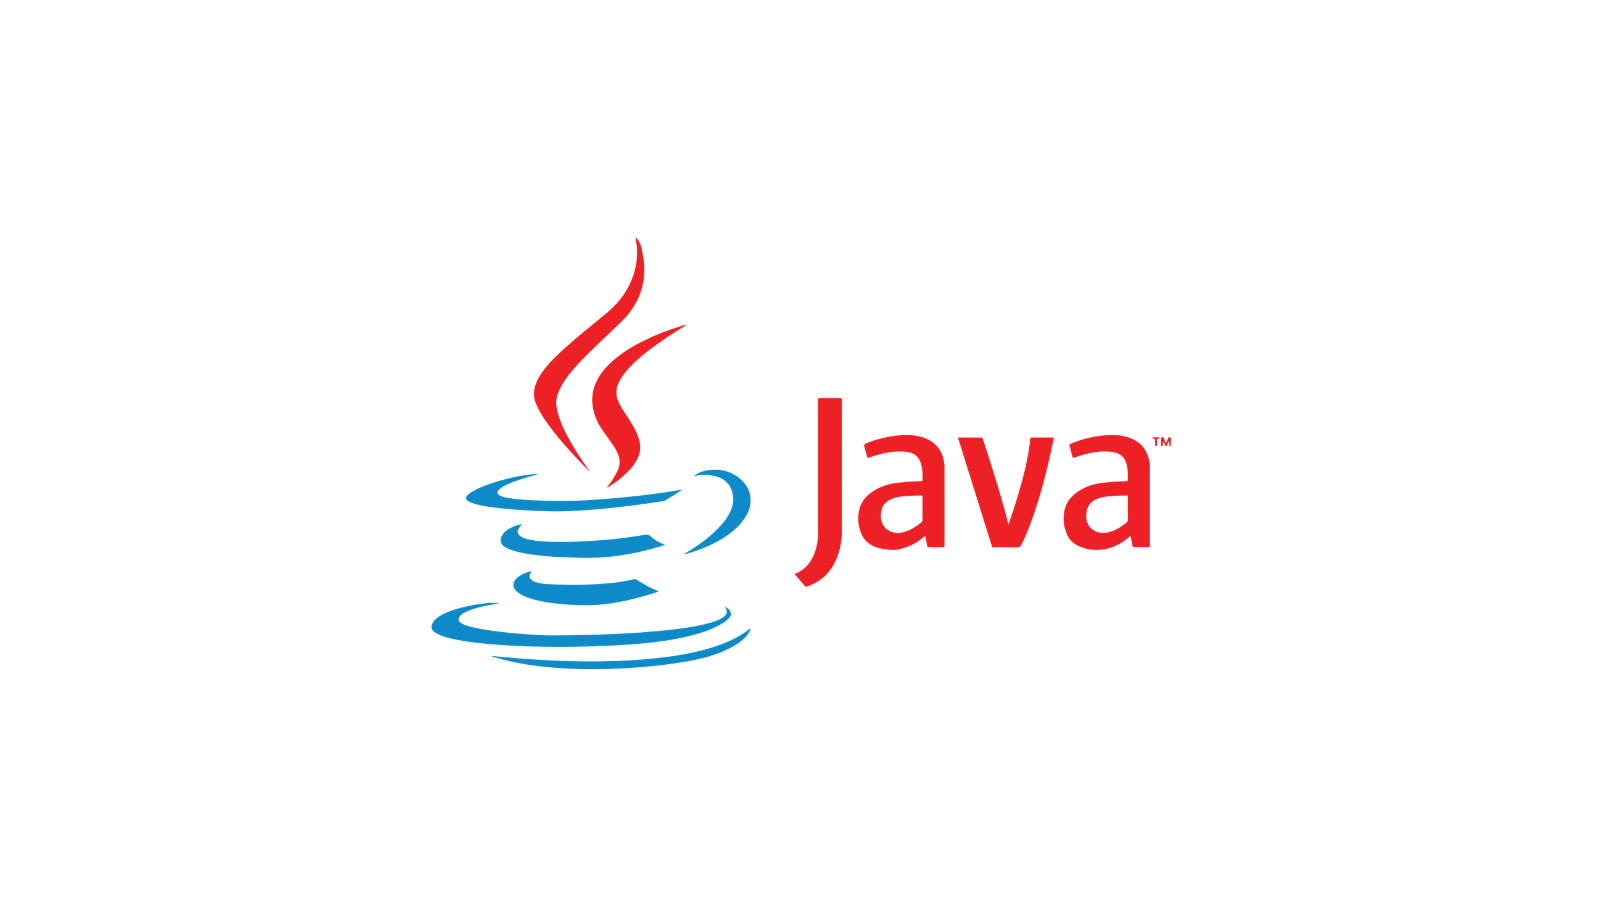 Java pc software download ups store laptop box